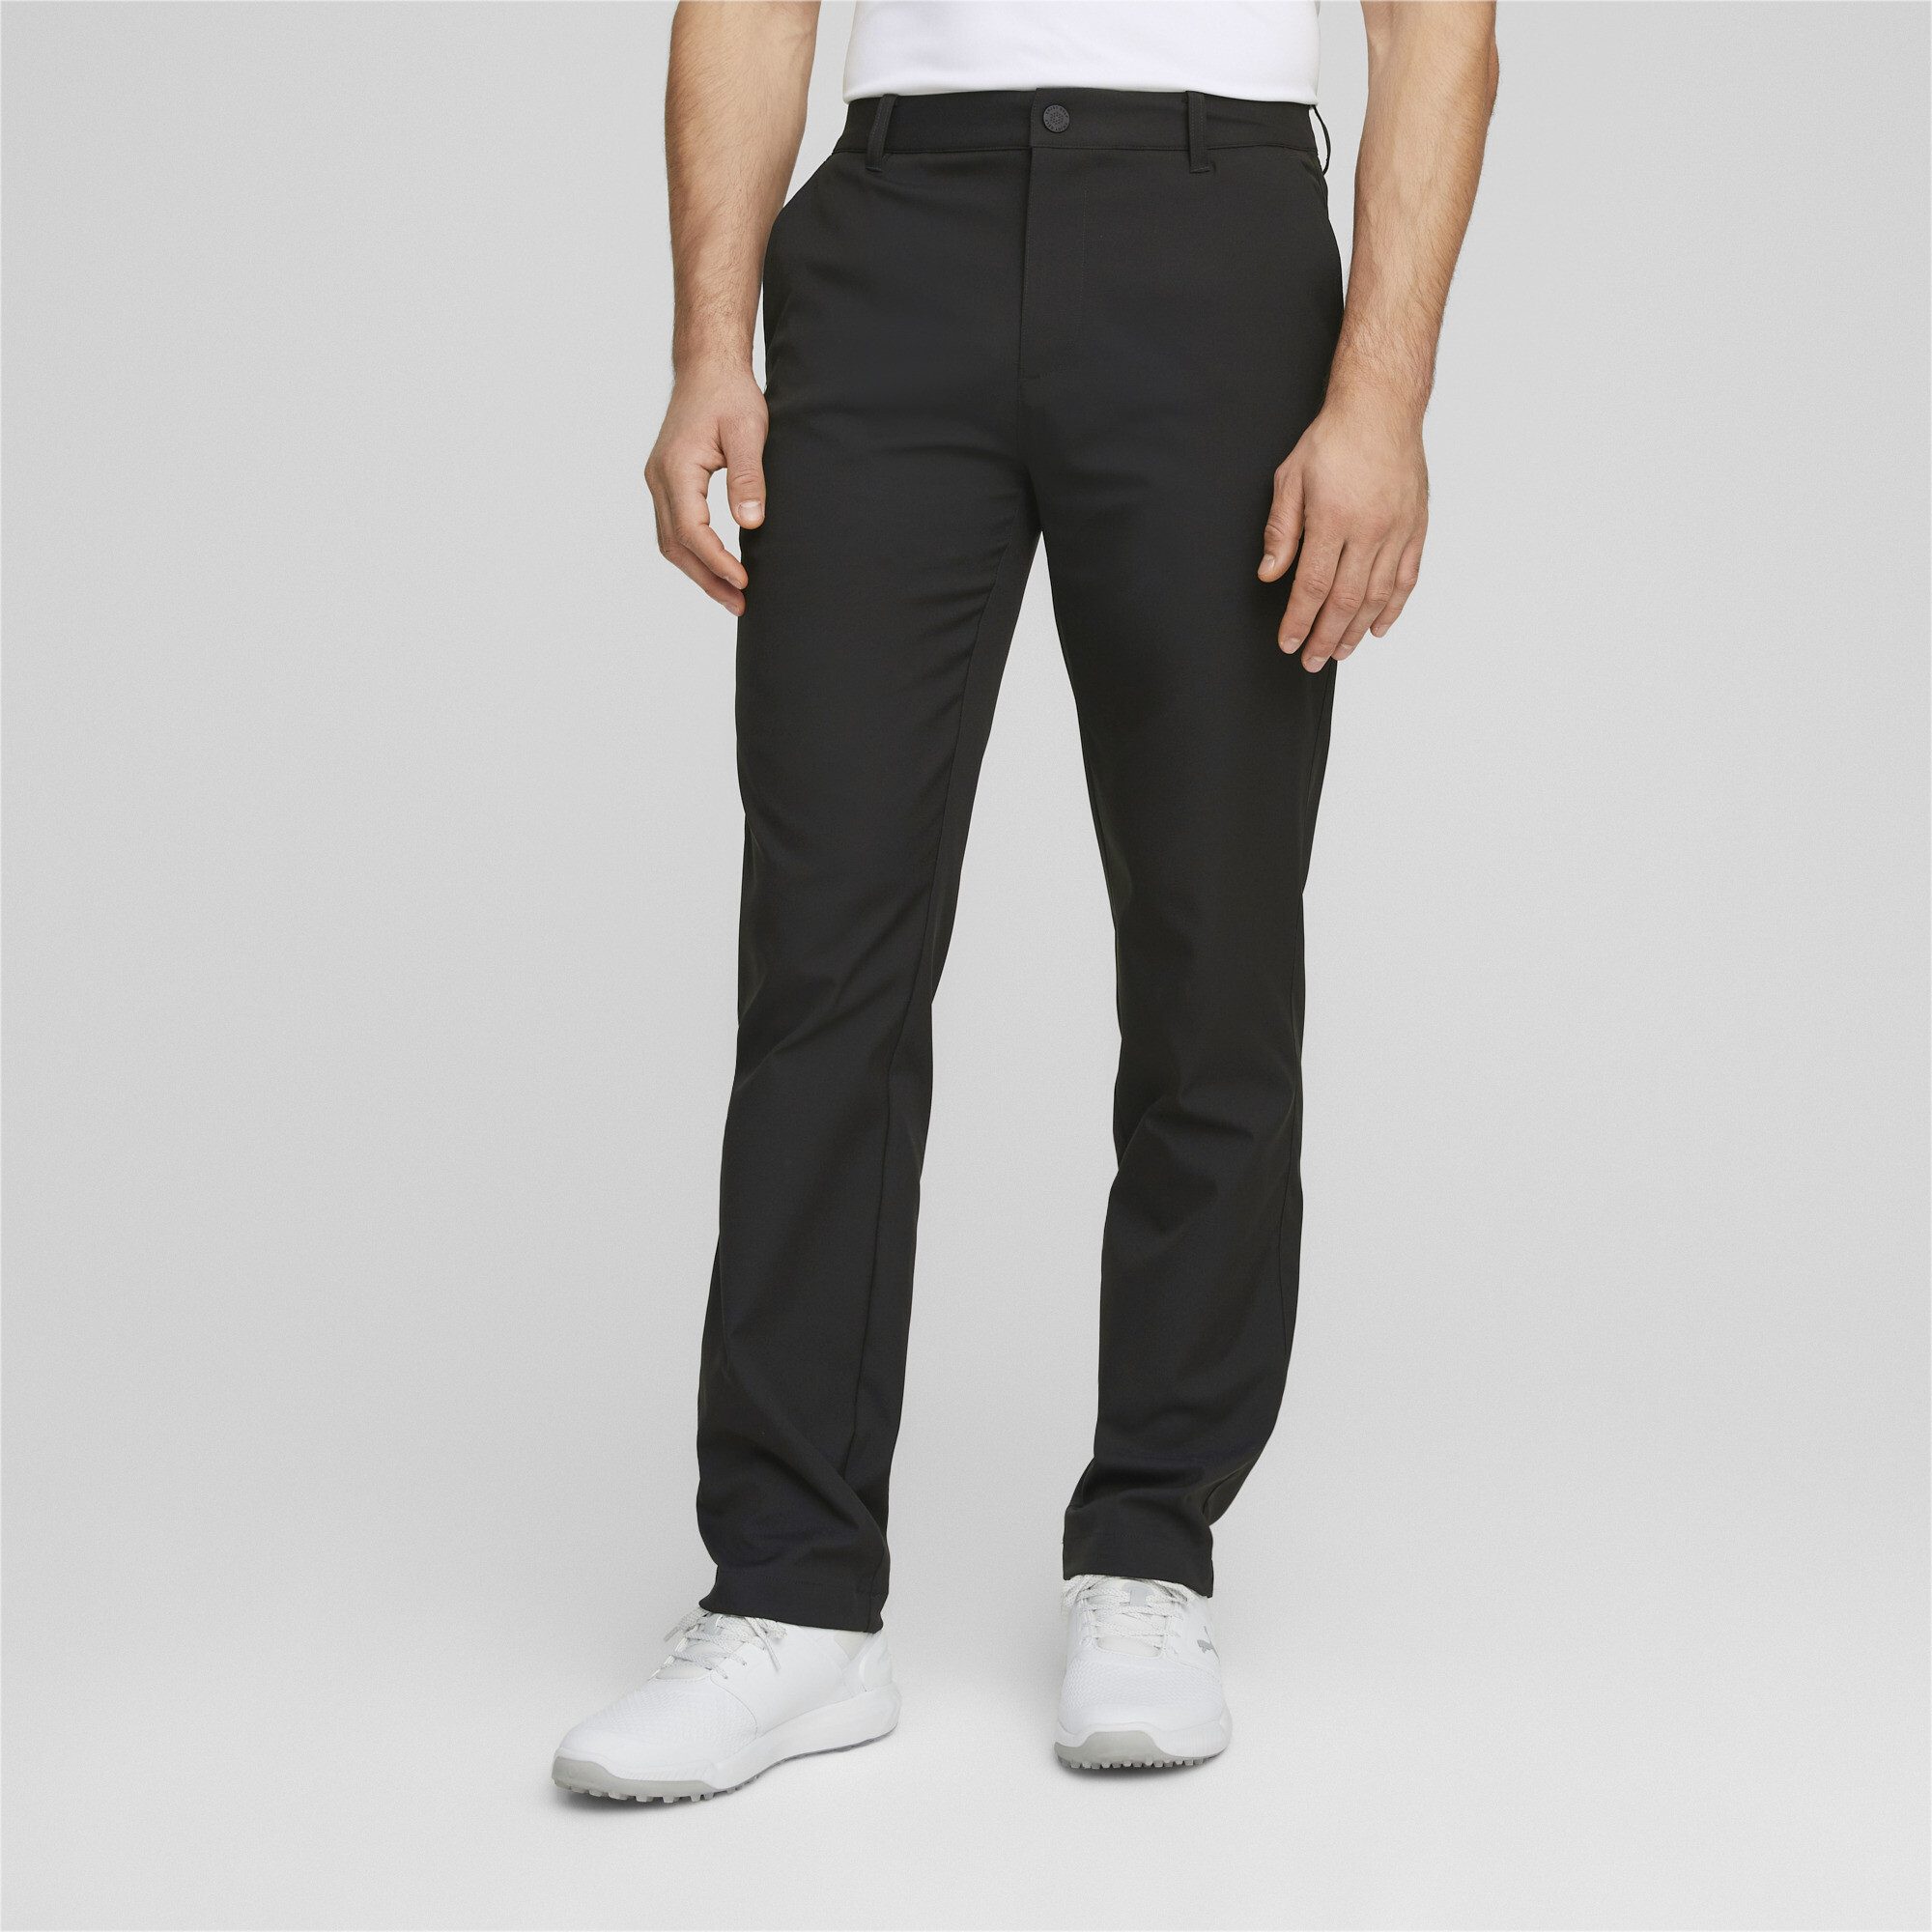 Men's Puma Dealer Golf Pants, Black, Size 29/32, Clothing